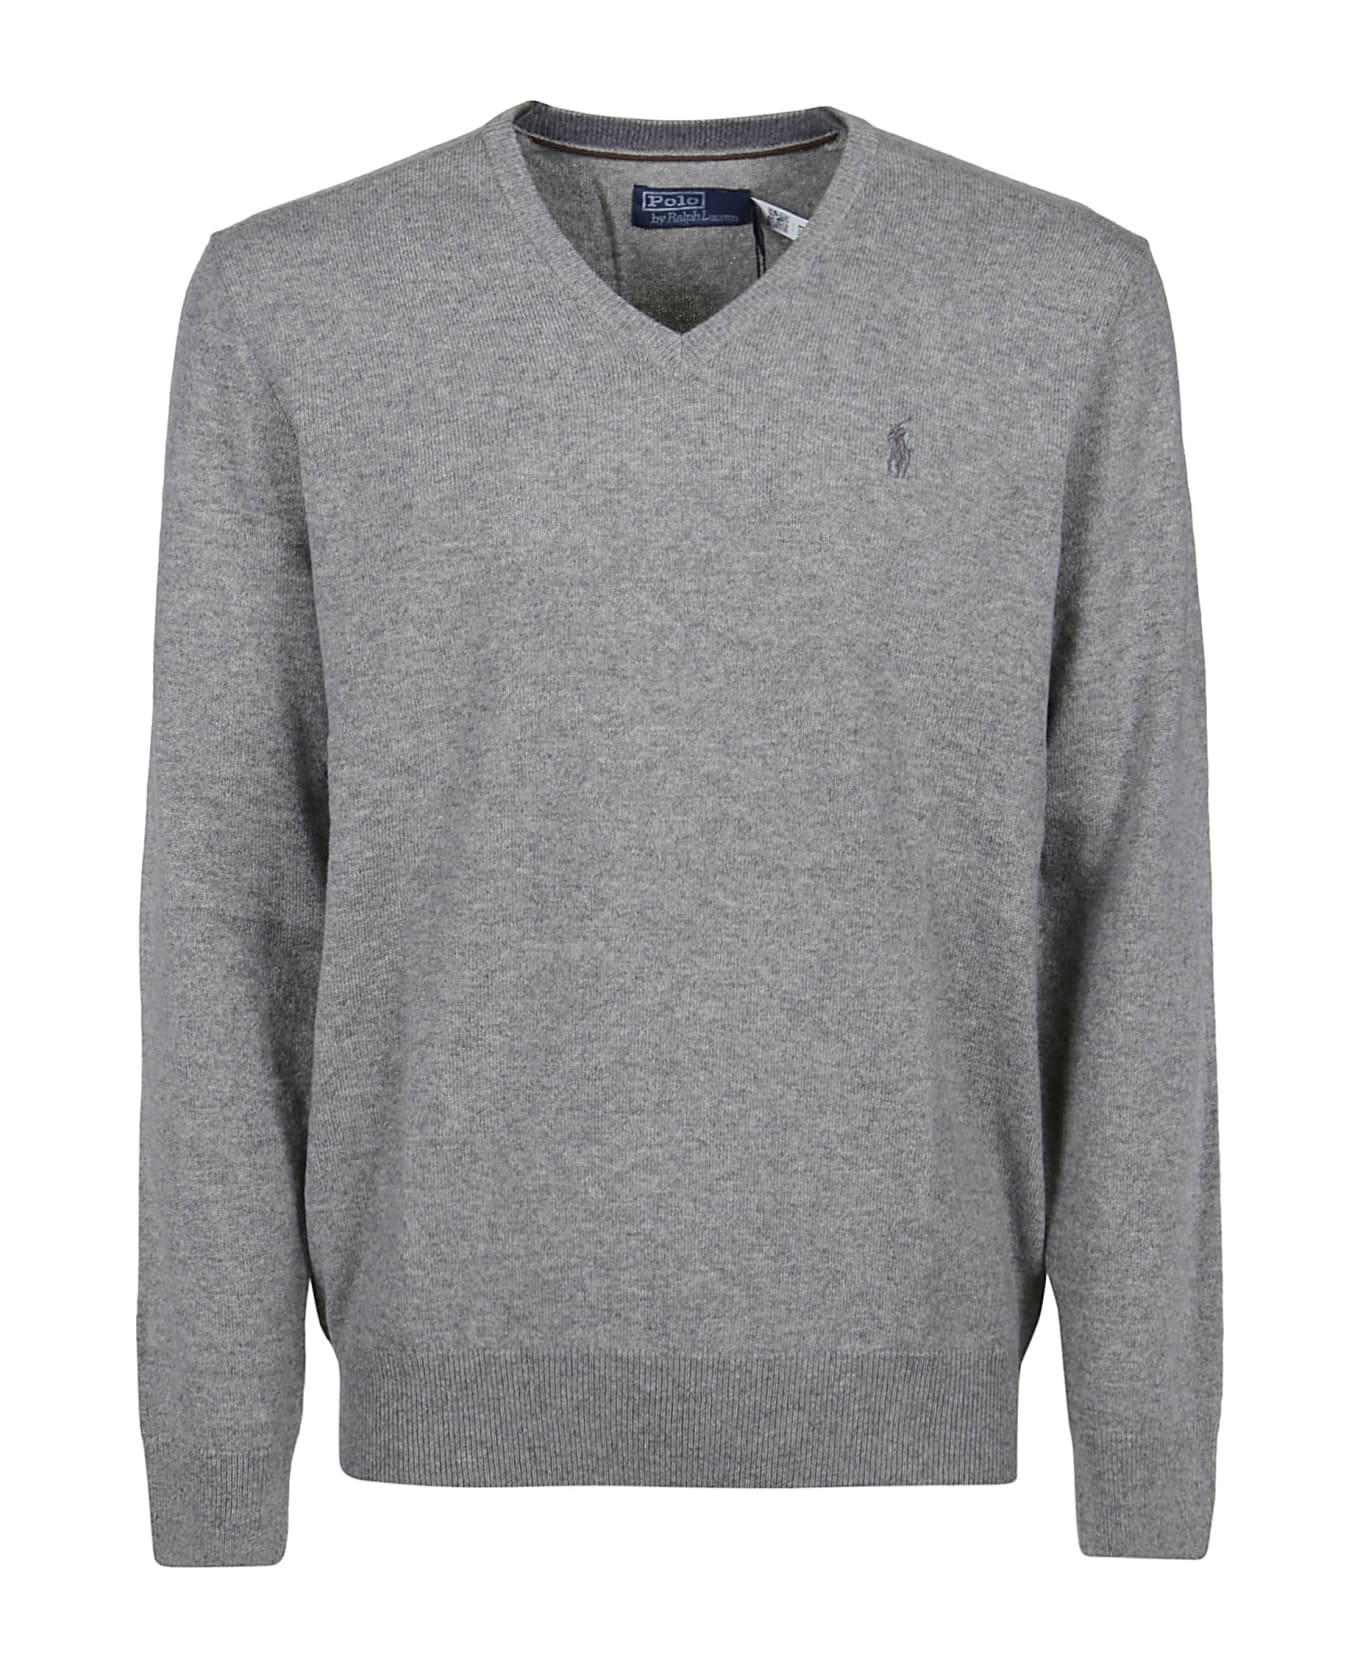 Polo Ralph Lauren Long Sleeve Sweater - Fawn Grey Heather